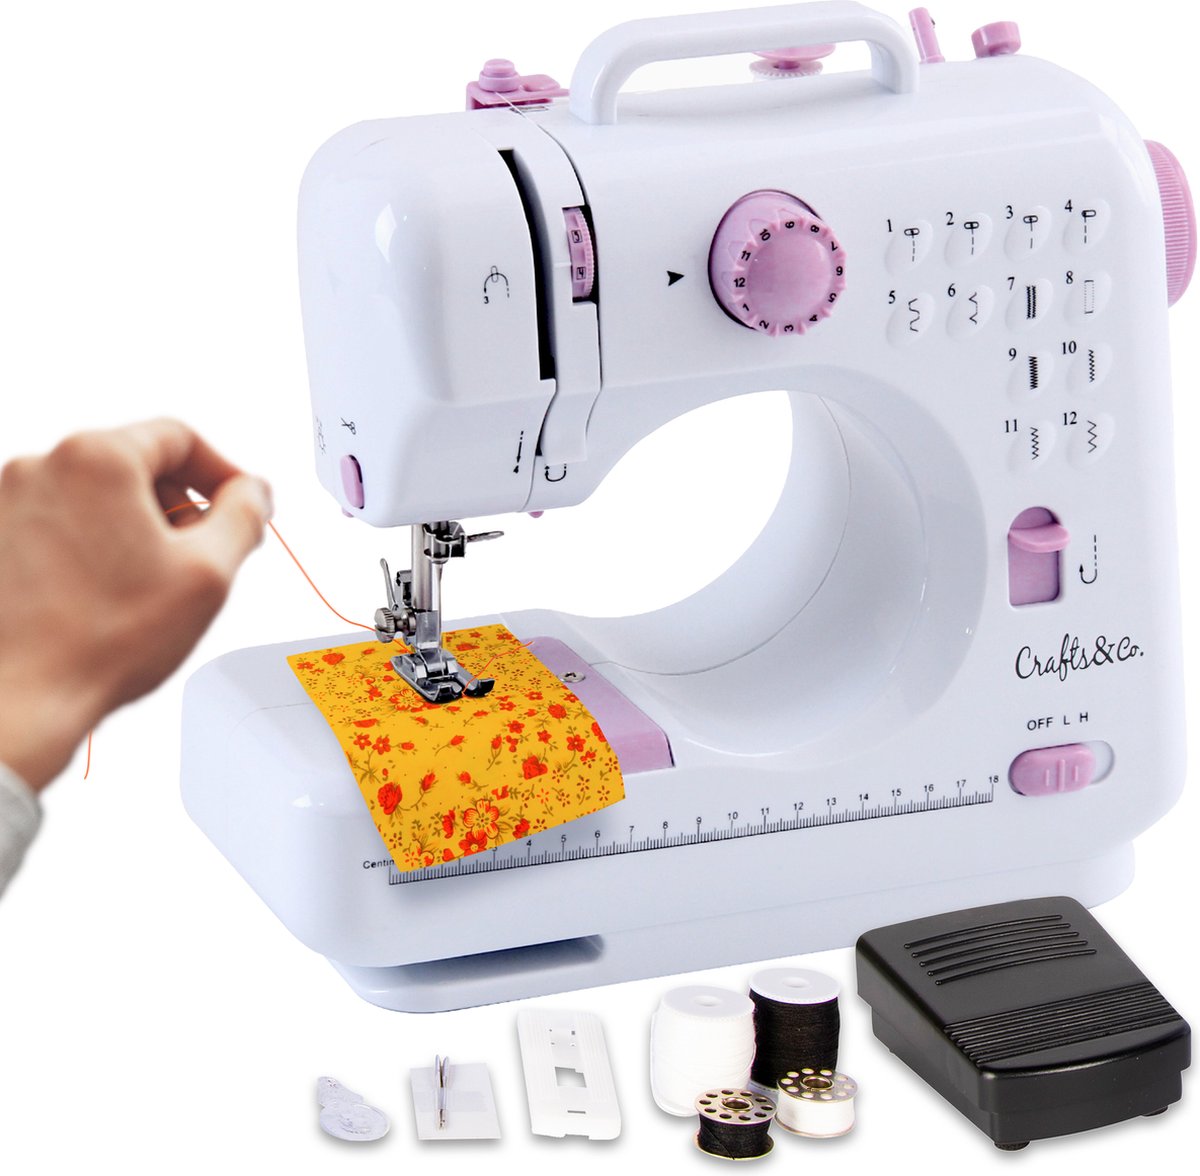 Crafts&Co Naaimachine - Naaimachines - Naaien voor Beginners & Kids - Sewing Machine - Naaiset - Wit - Crafts&Co